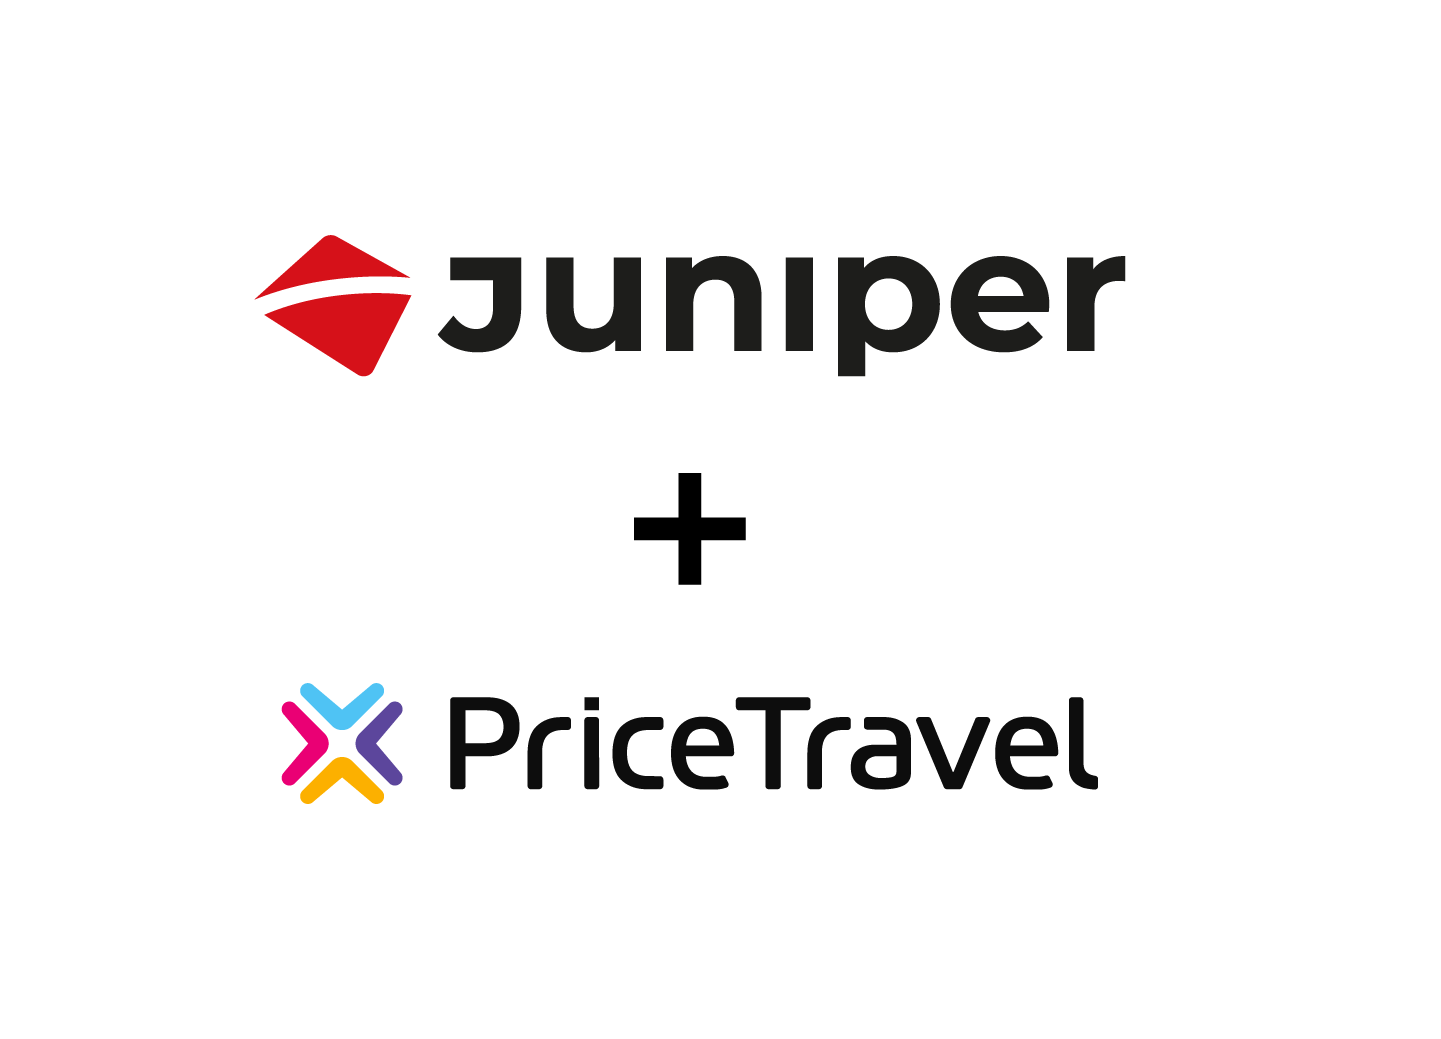 PriceTravel's connection through Juniper